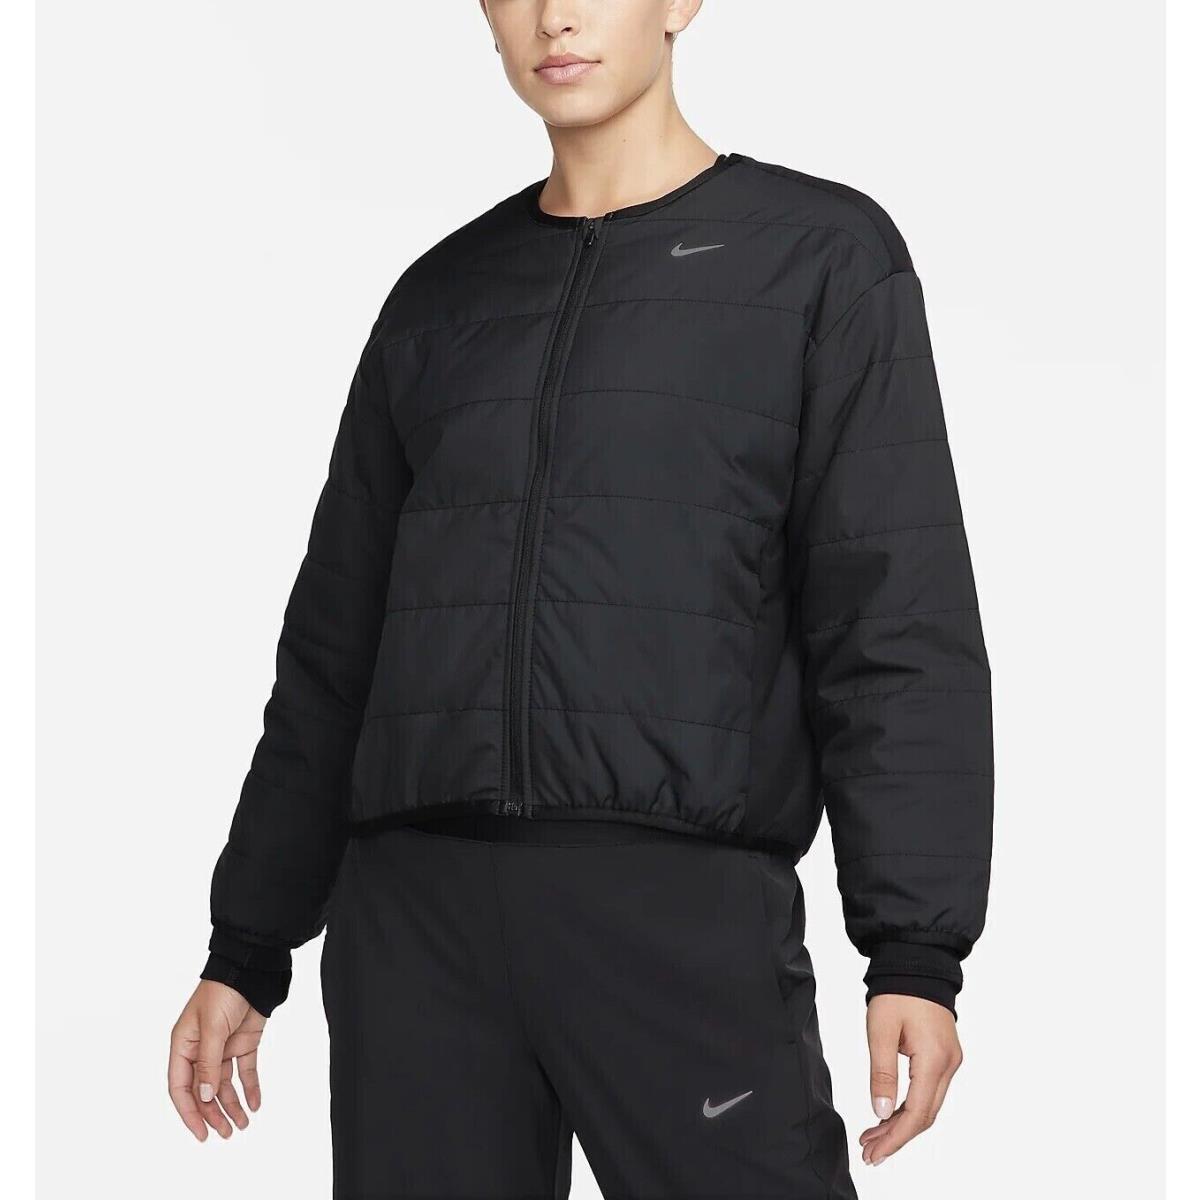 Women`s Nike Therma-fit Swift Running Jacket Large L Black